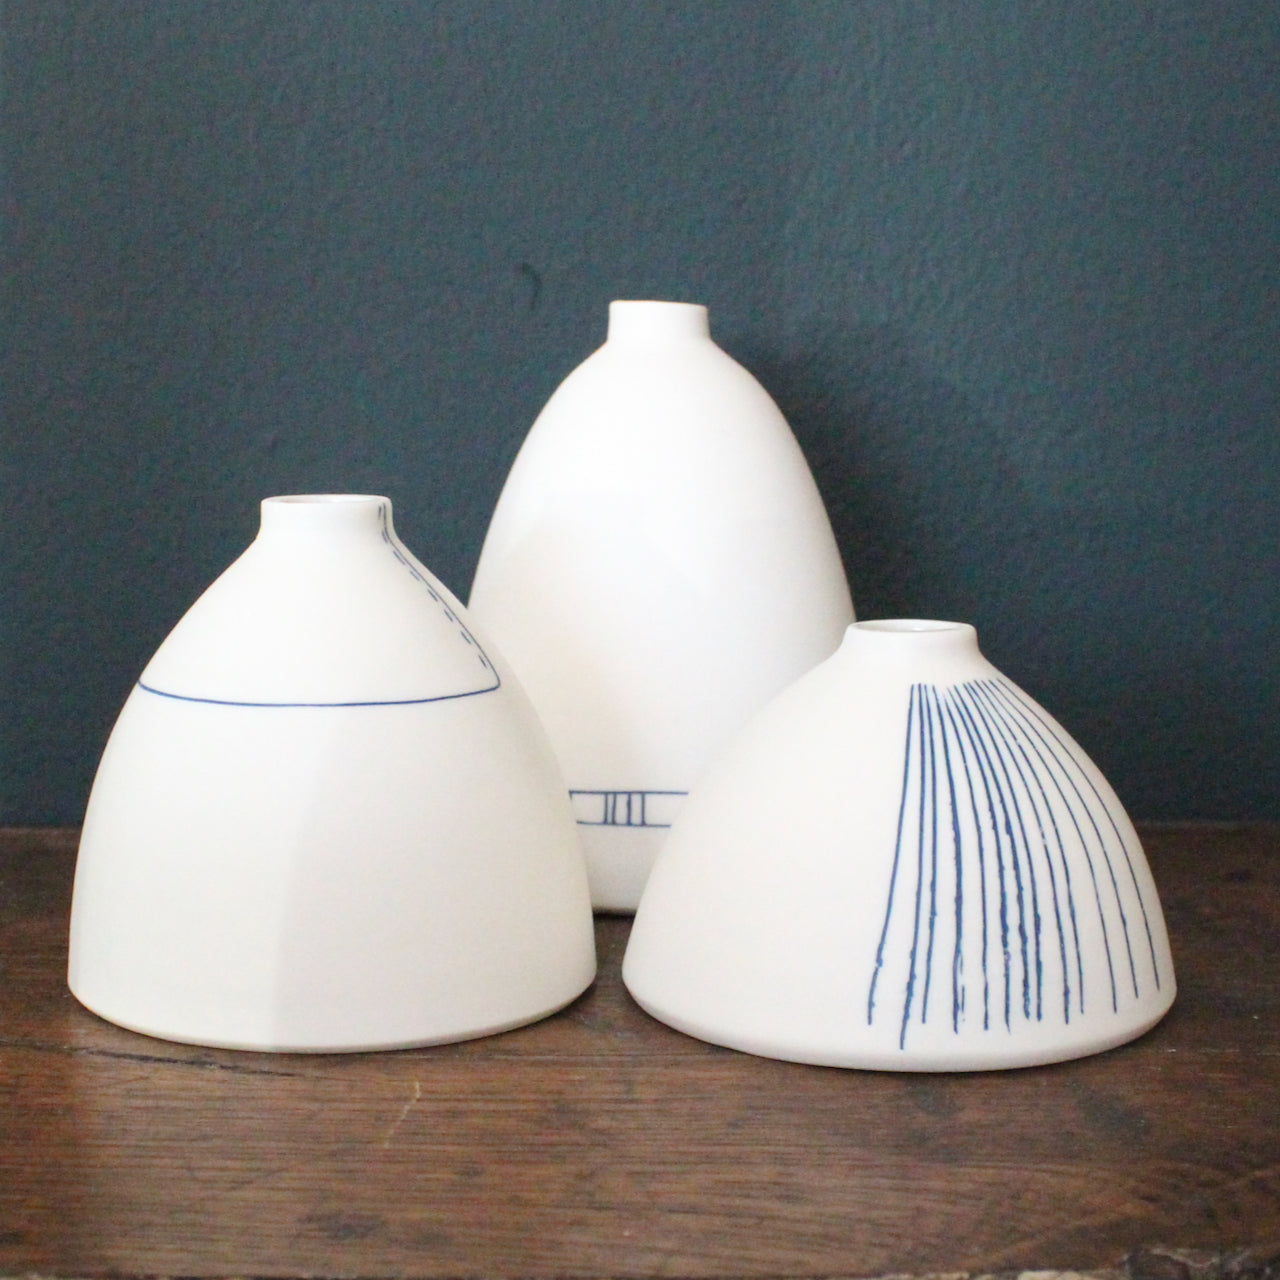 Liz O'Dwyer - Trio of vases